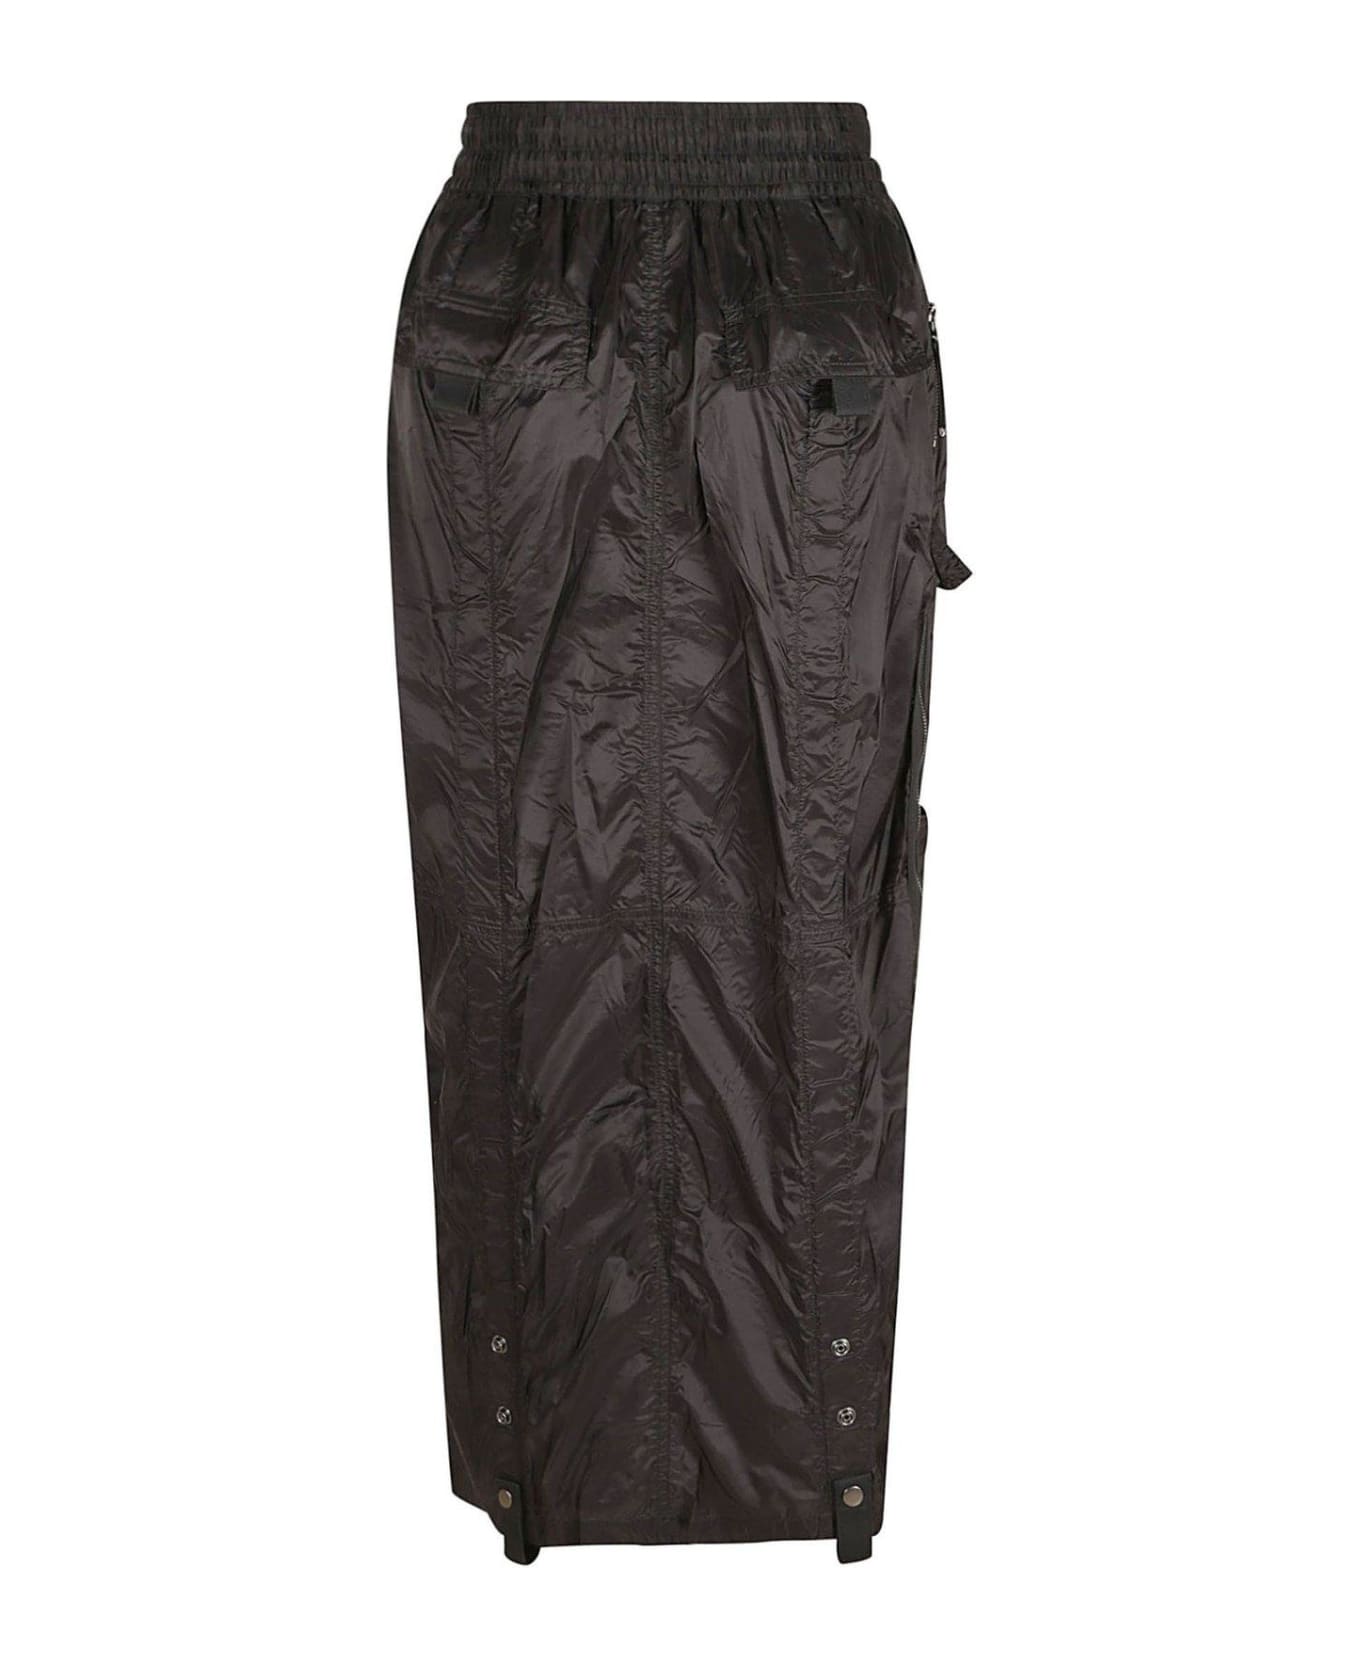 Diesel O Crep Zipped Skirt - Non definito